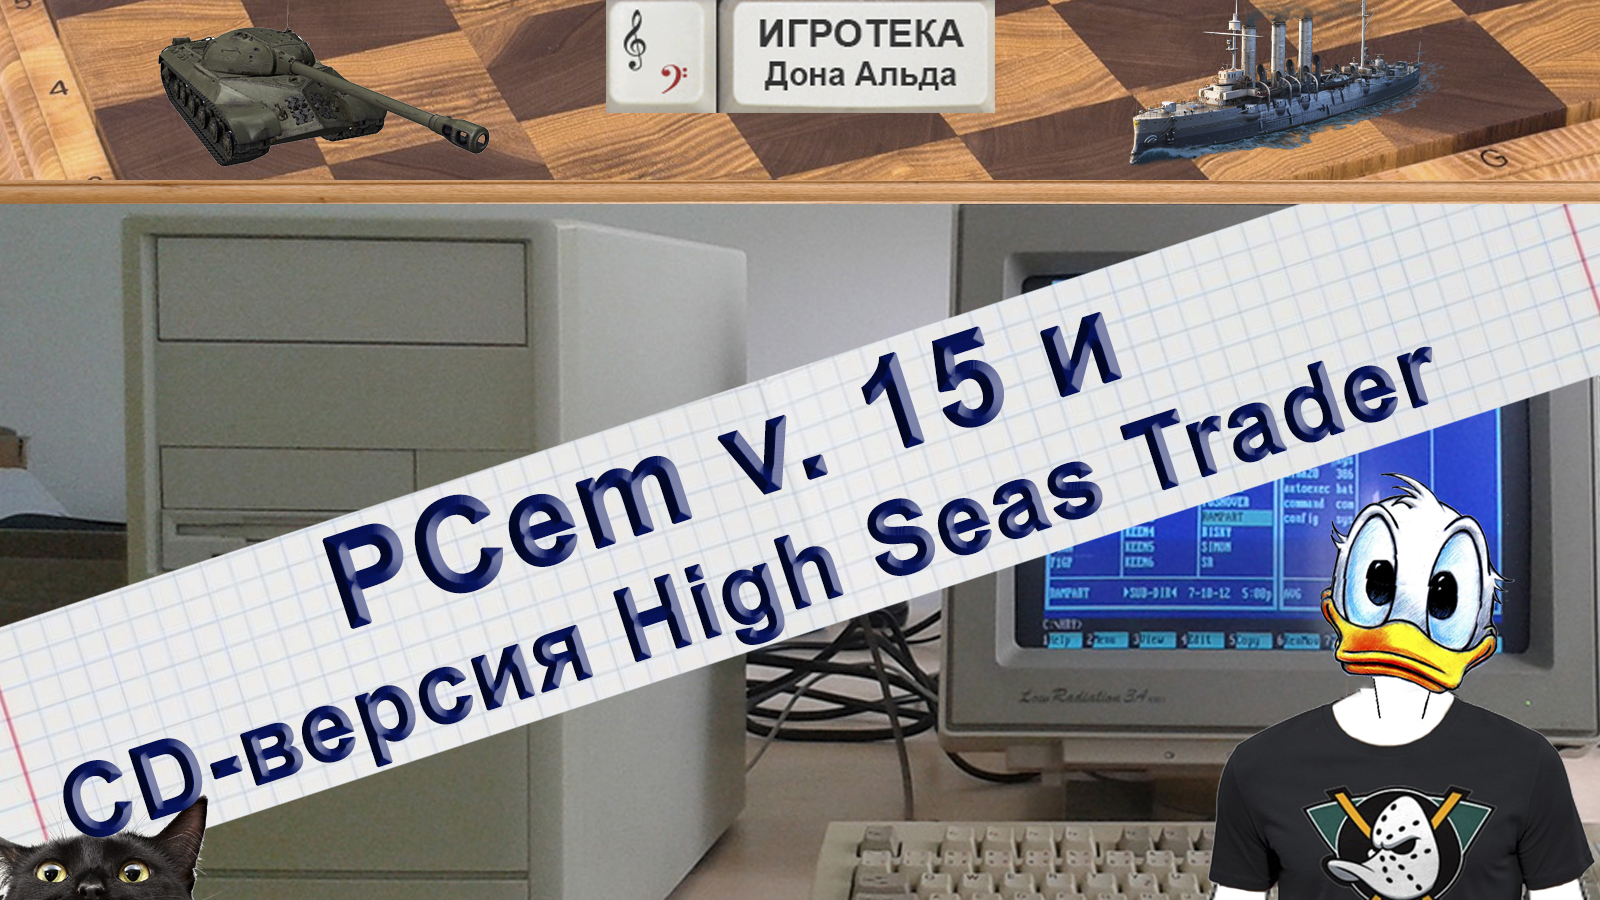 PCem v15 и CD-версия High Seas Trader